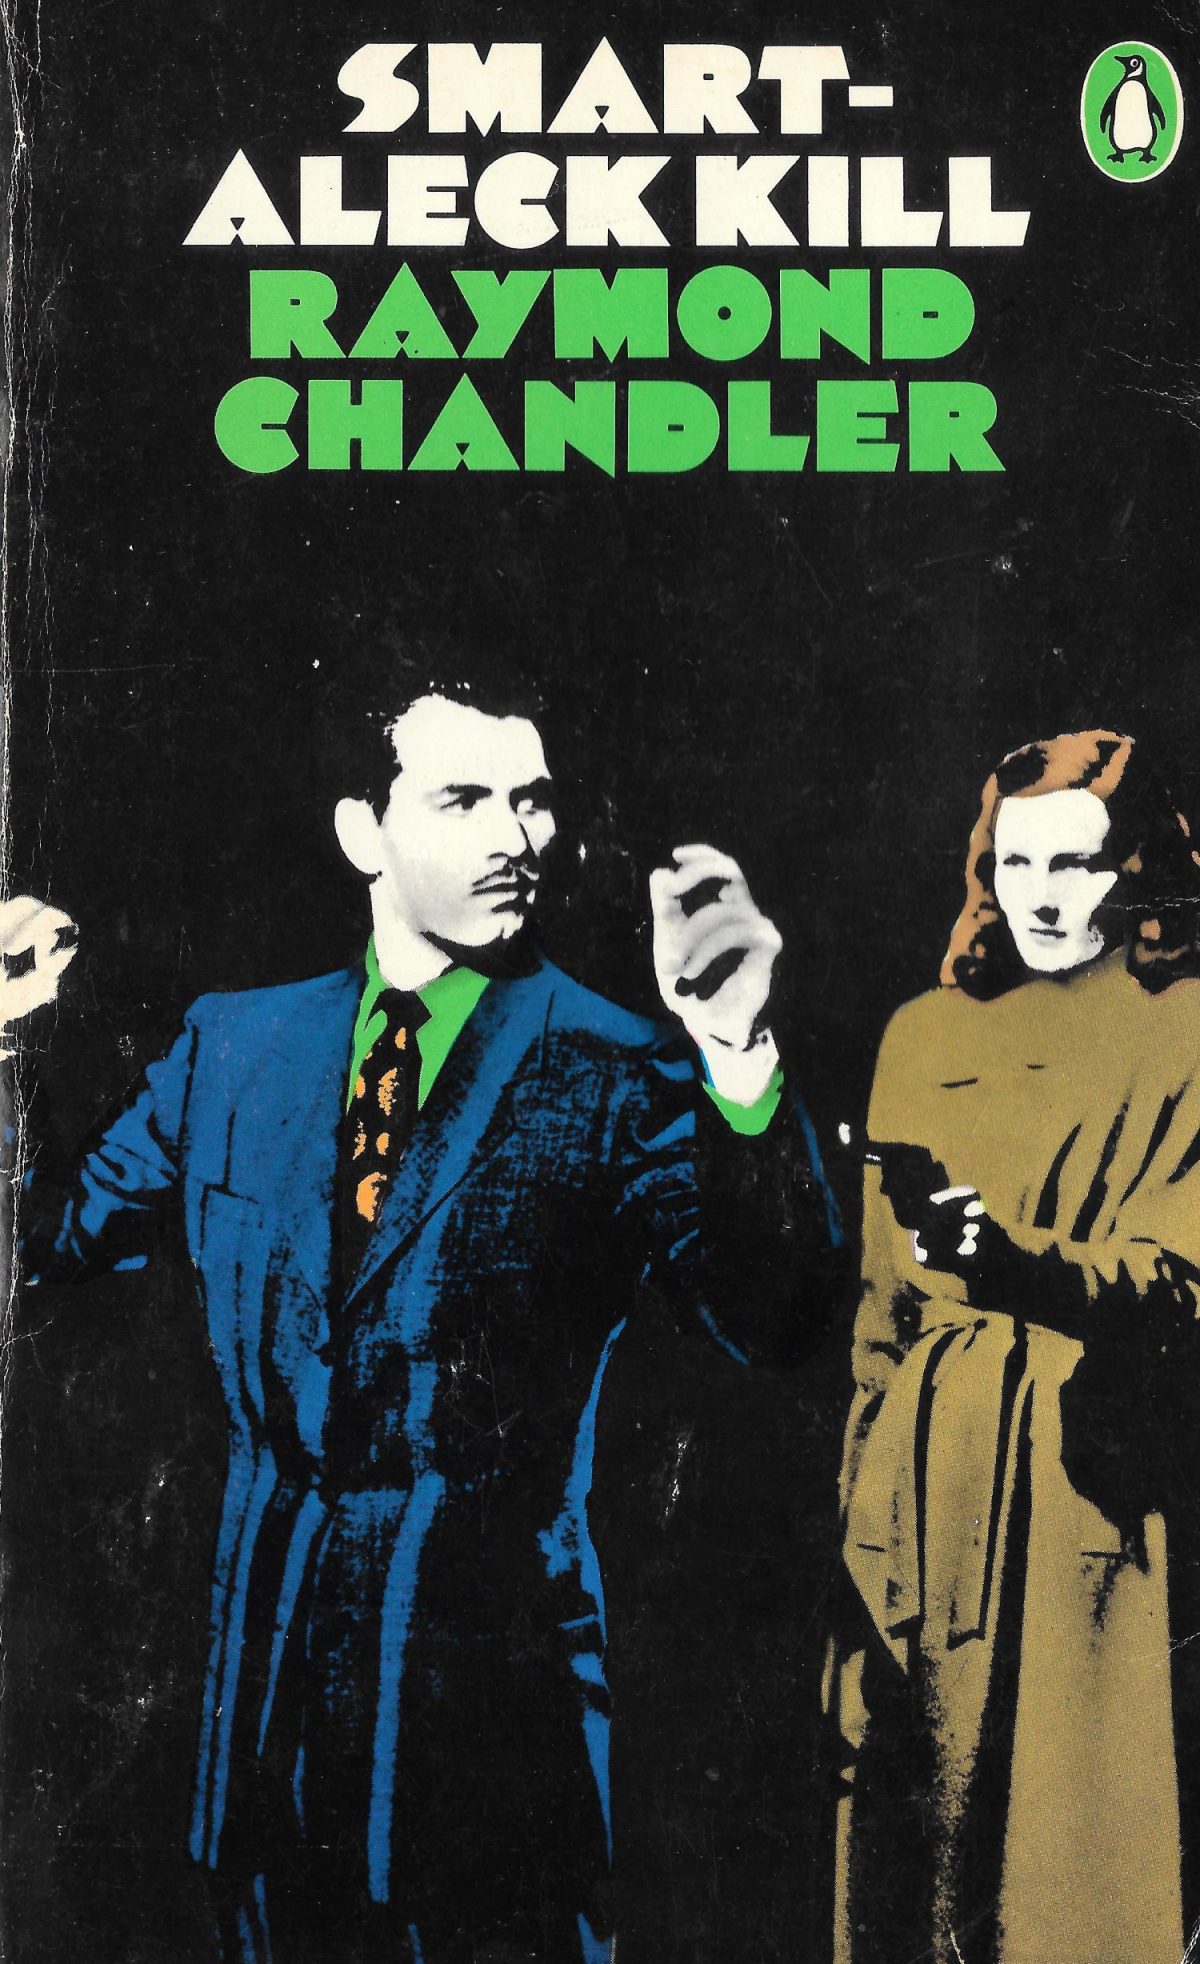 Raymond Chandler, The Smart Aleck Kill, crime fiction, Penguin Books